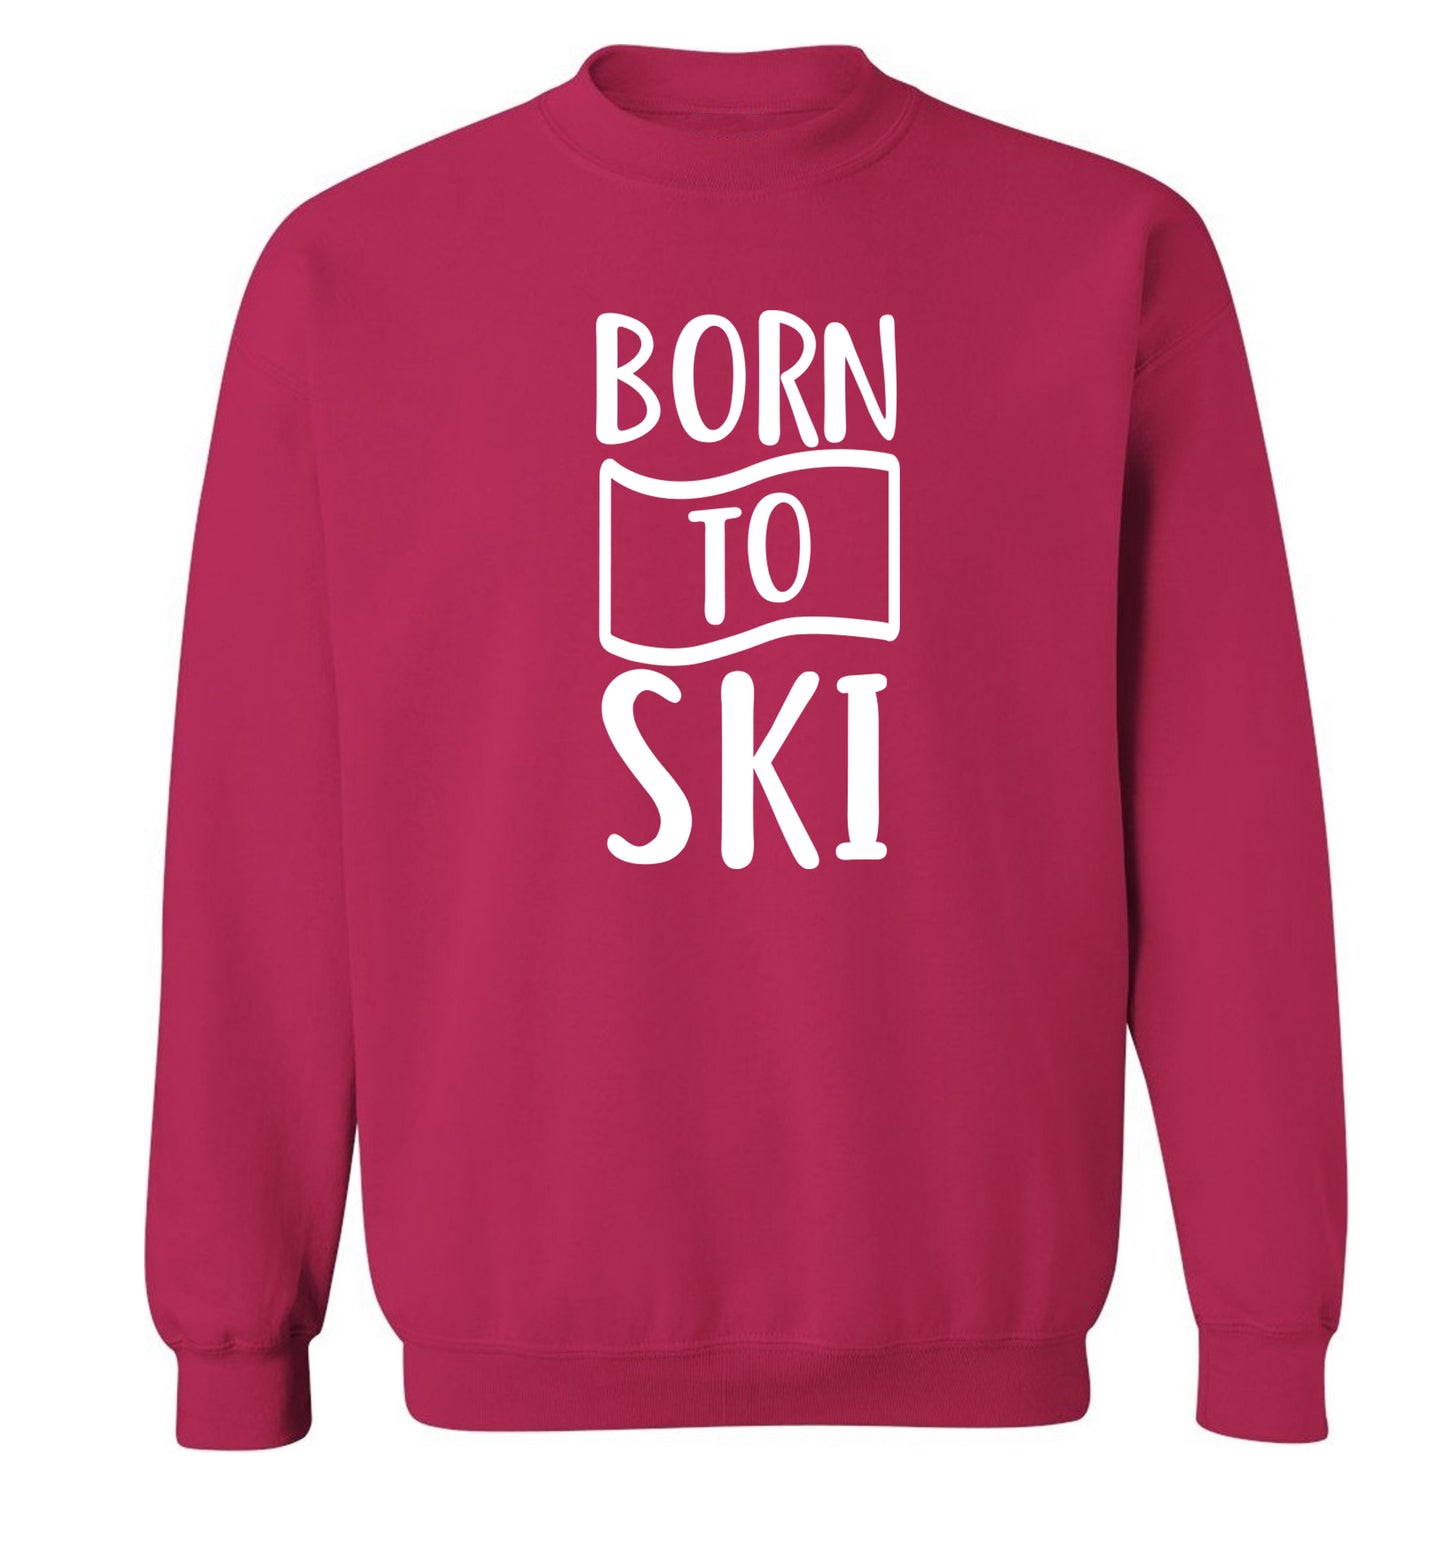 Born to ski Adult's unisexpink Sweater 2XL